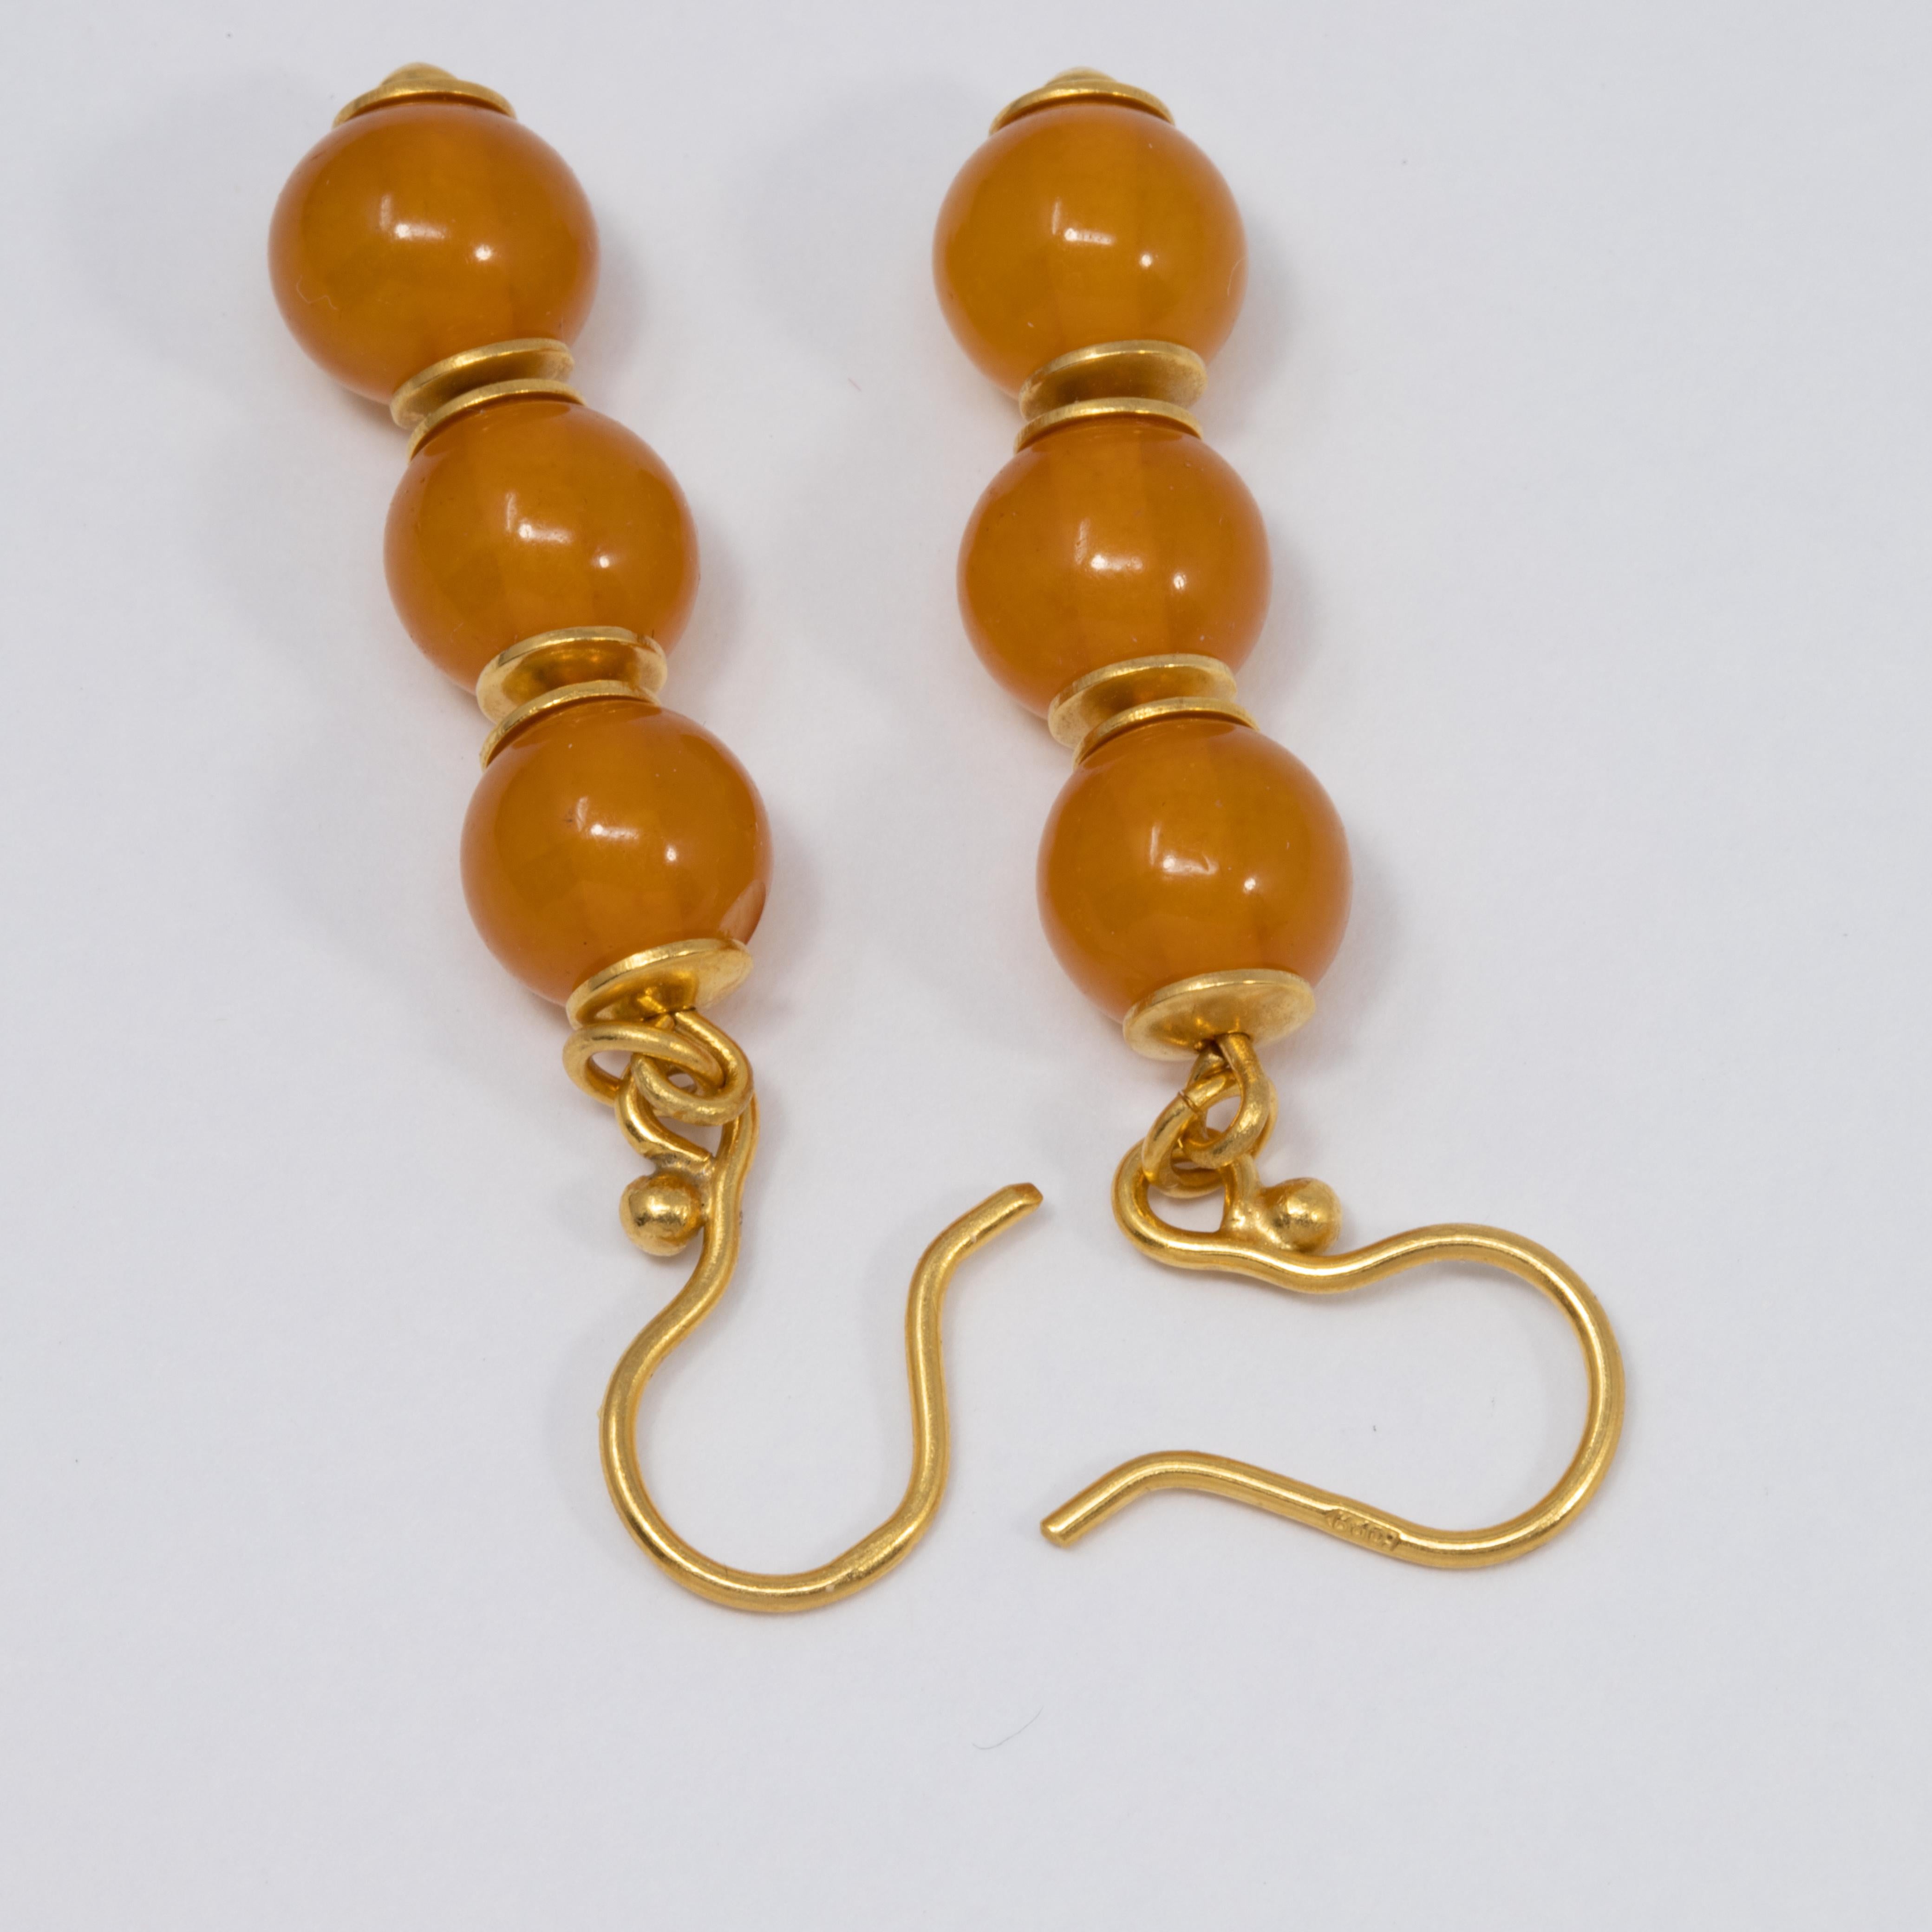 Women's or Men's Russian Orange Baltic Amber Bead Dangling Earrings in Gold, Early to Mid 1900s